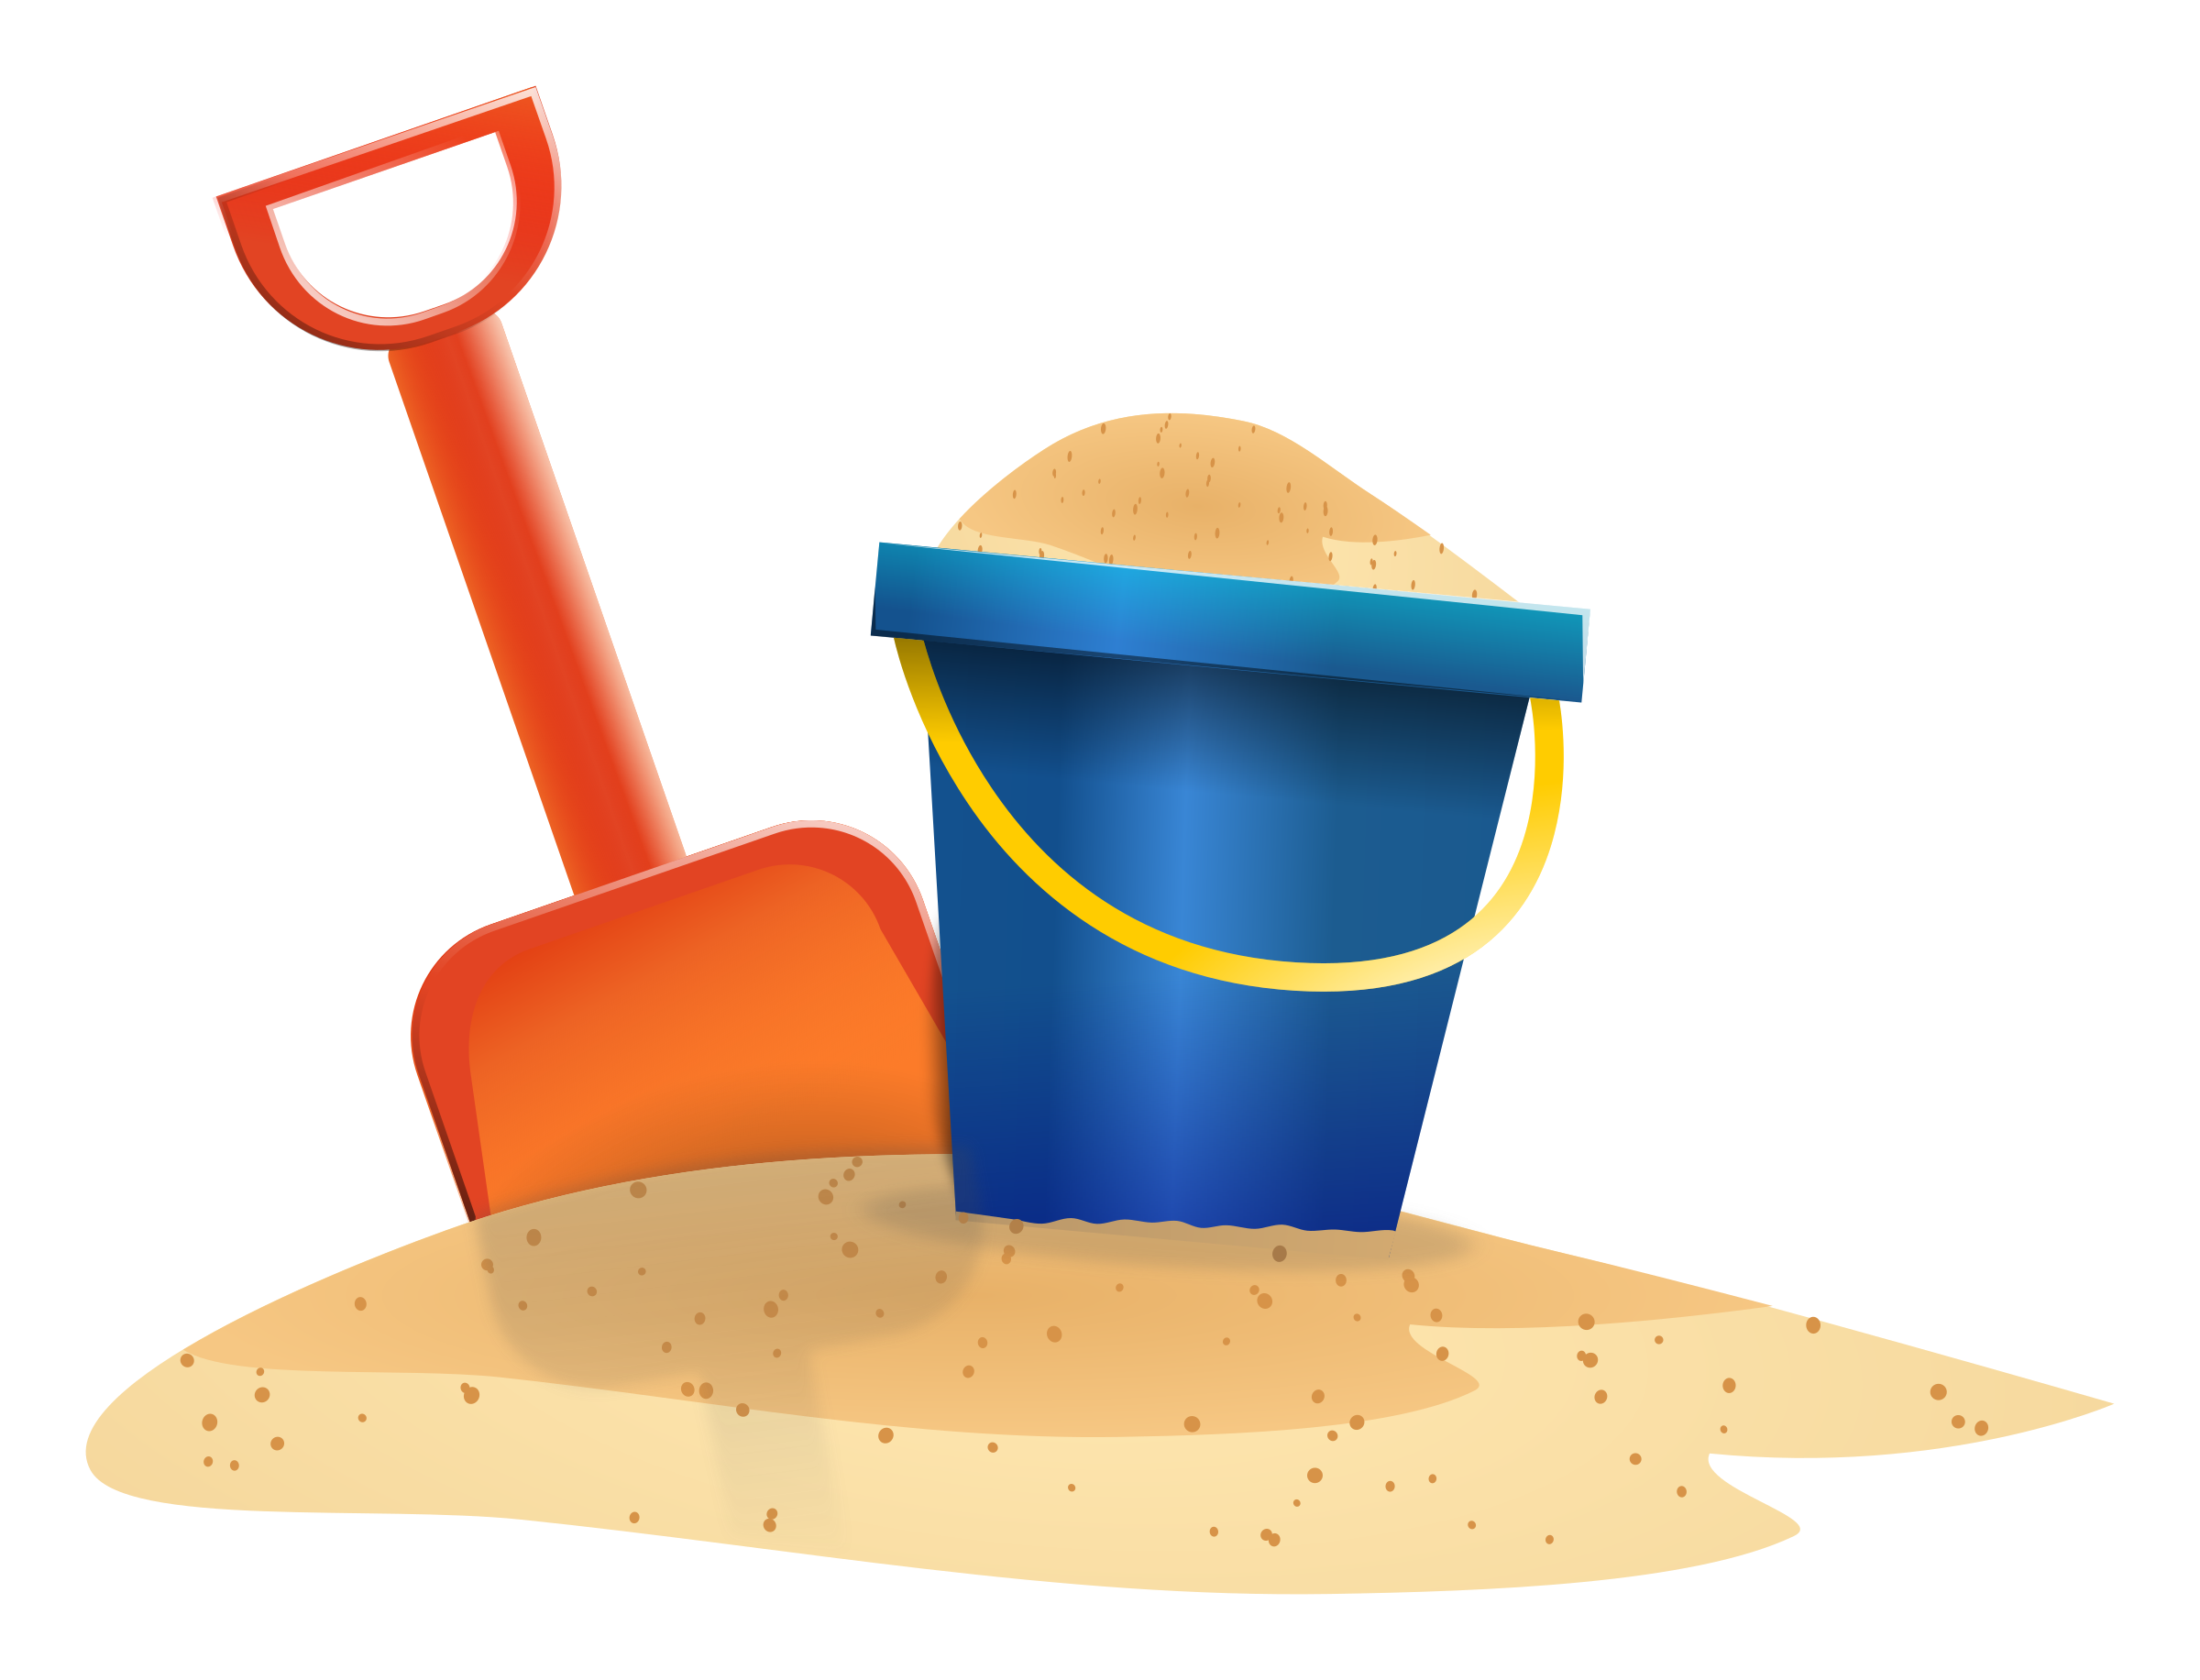 Play on the beach. Gardening clipart small shovel